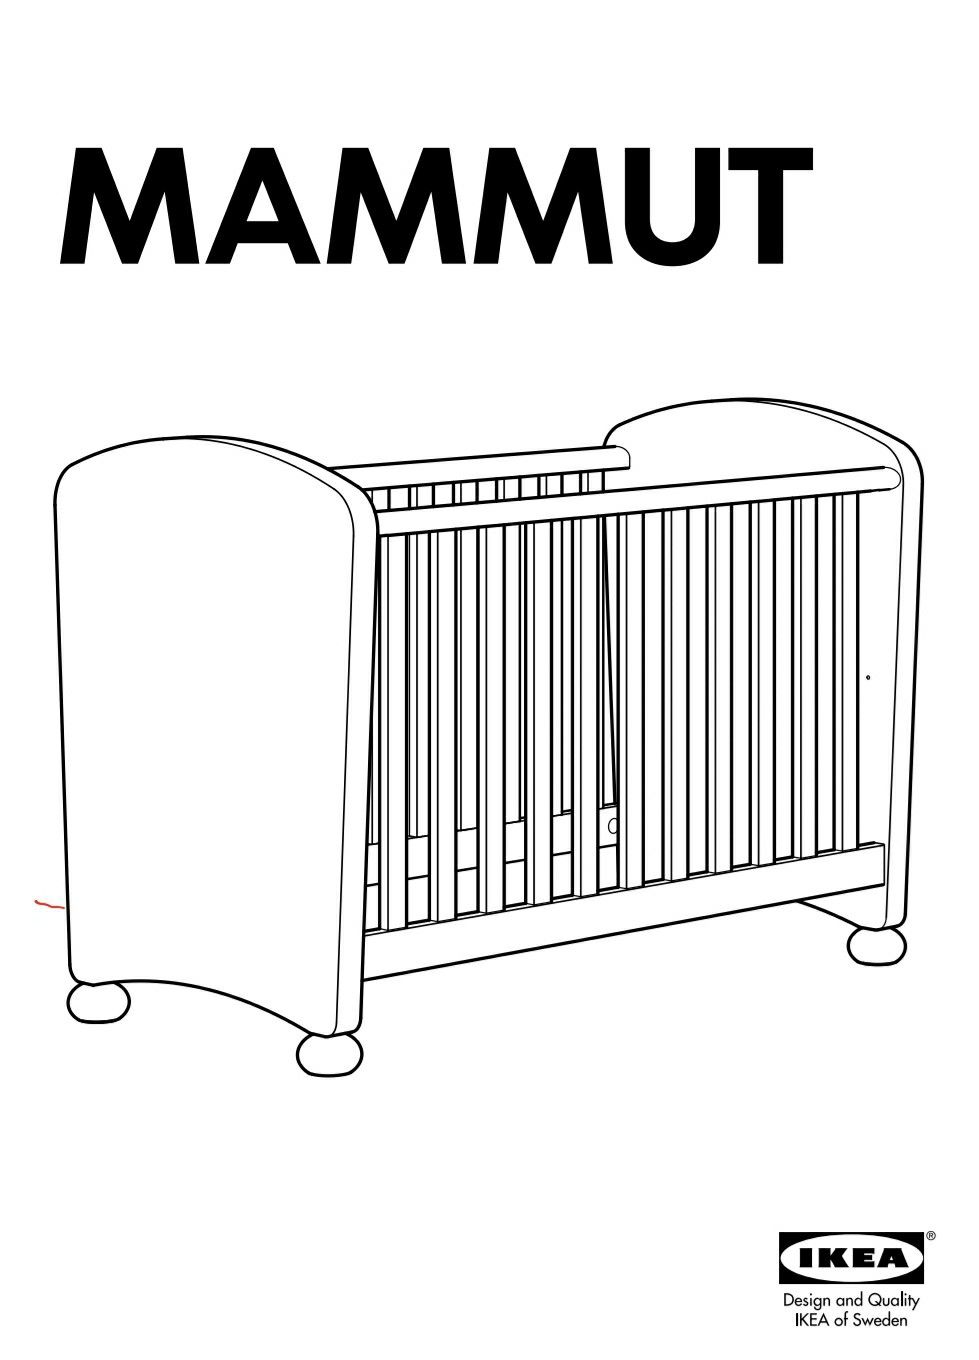 Ikea Mammut Crib/Toddler Bed